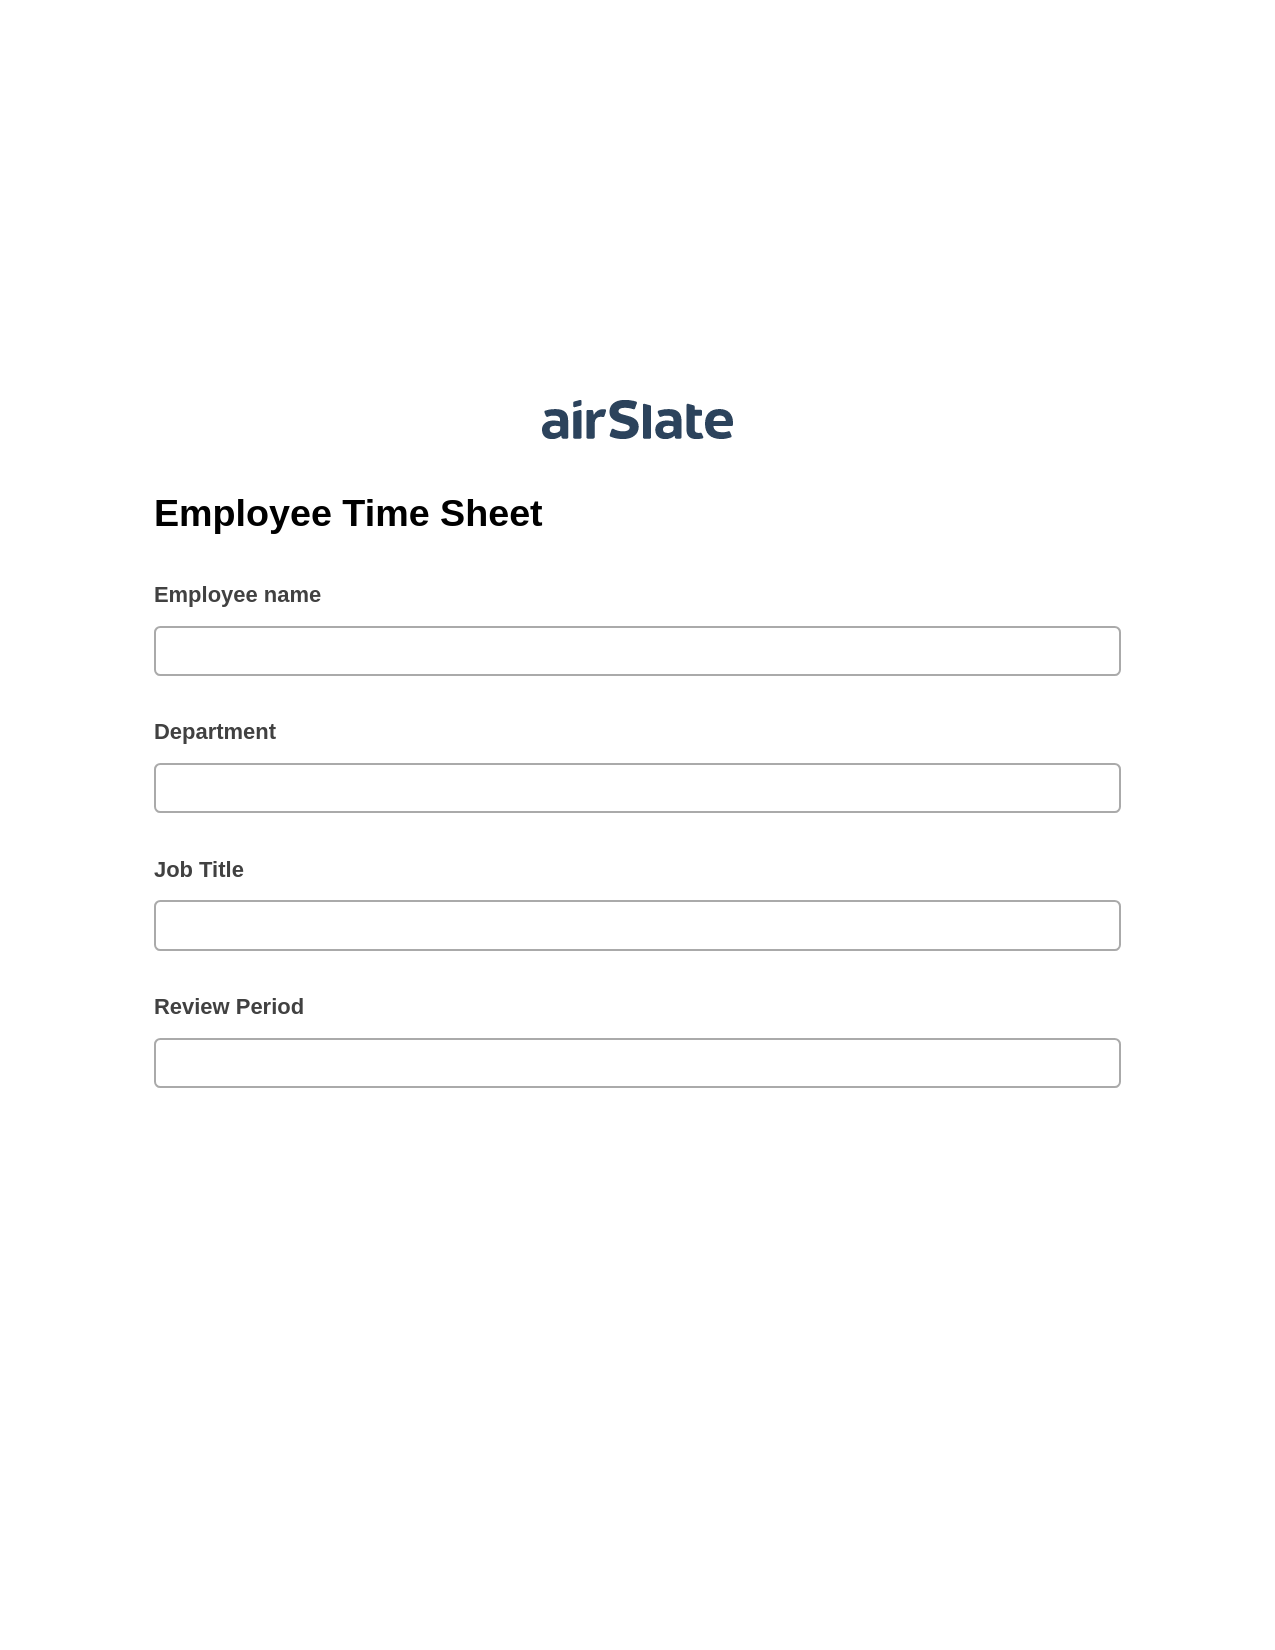 Multirole Employee Time Sheet Pre-fill from CSV File Bot, Rename Slate Bot, Post-finish Document Bot